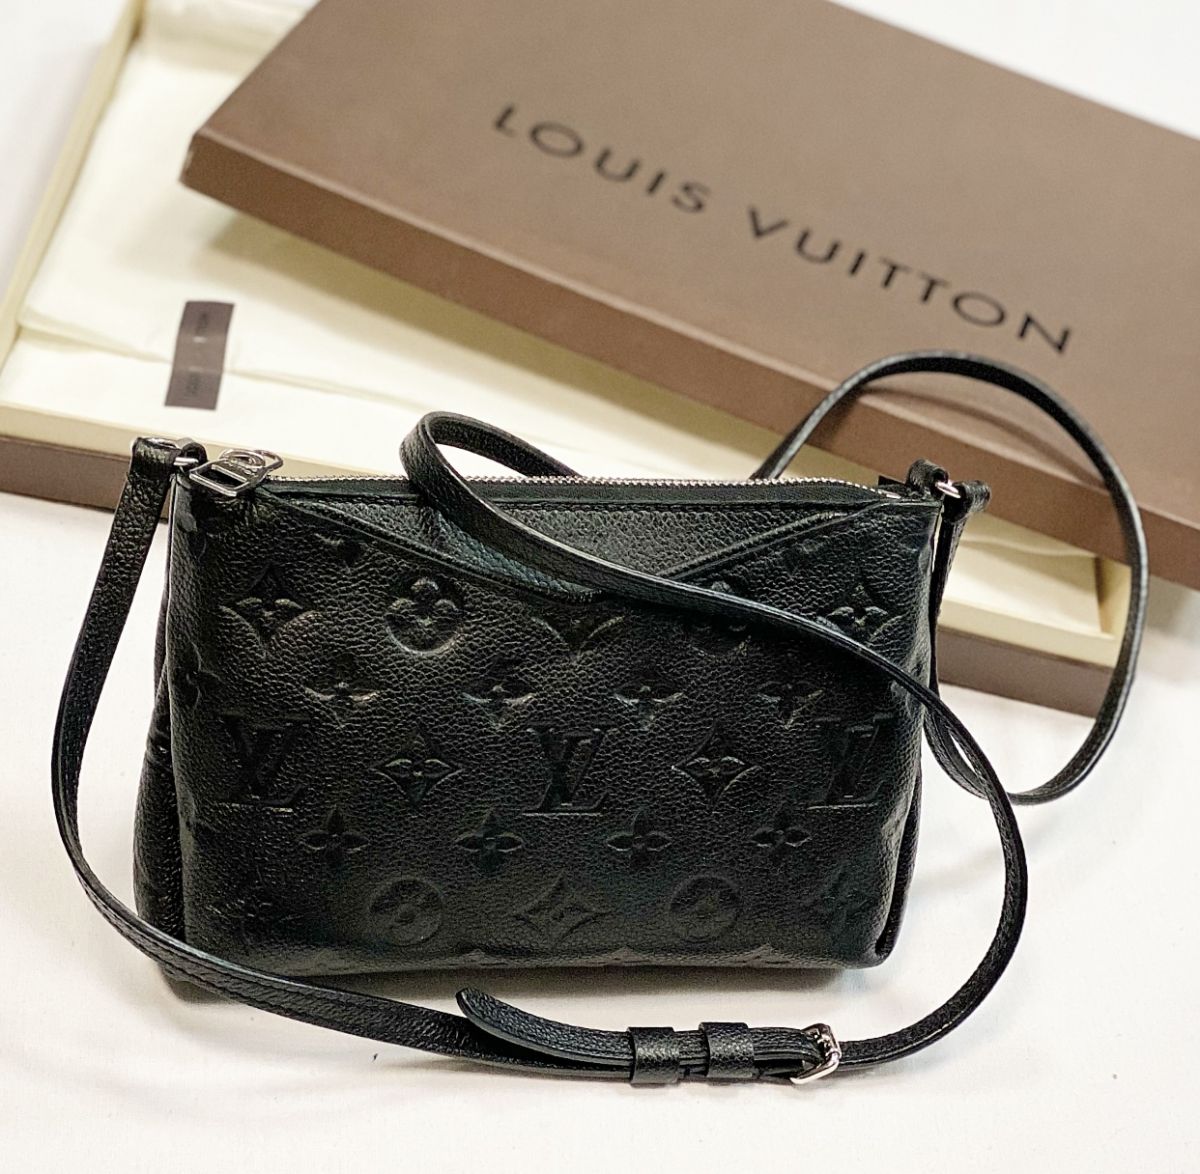 Сумка Louis Vuitton размер 20/13 цена 38 463 руб 